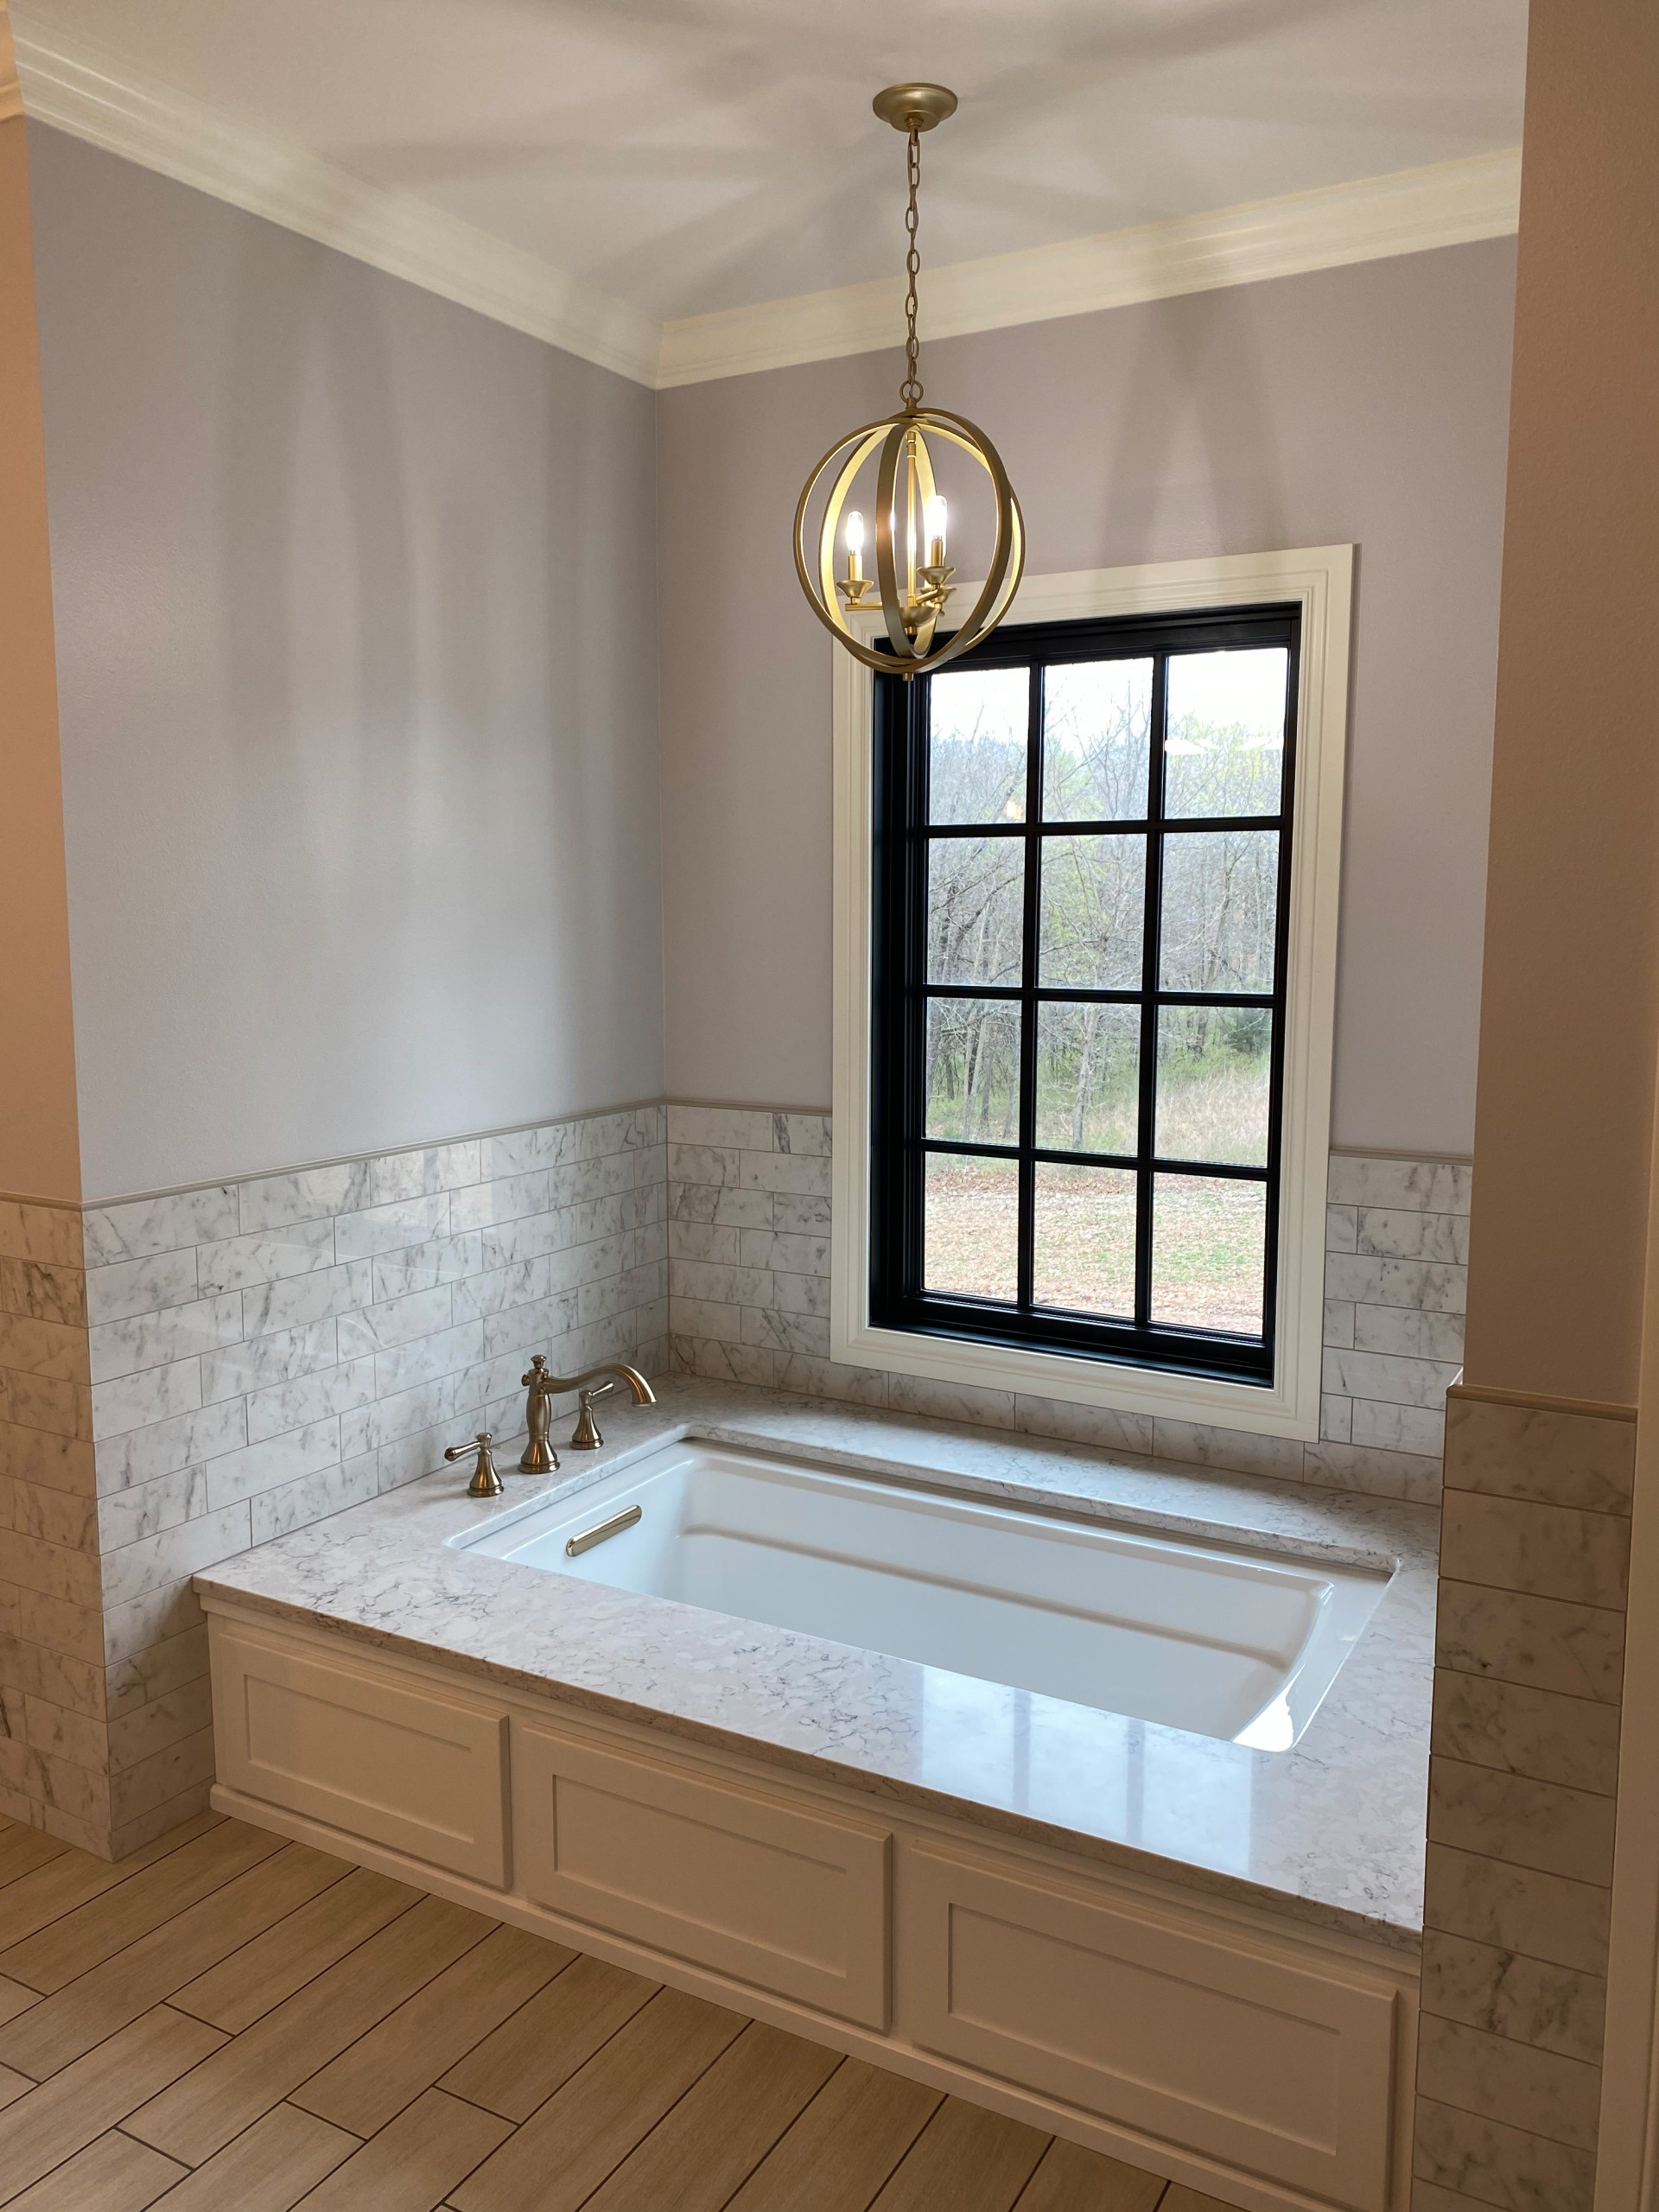 Master bathtub with quartz surround, tile backsplash, and champagne bronze light